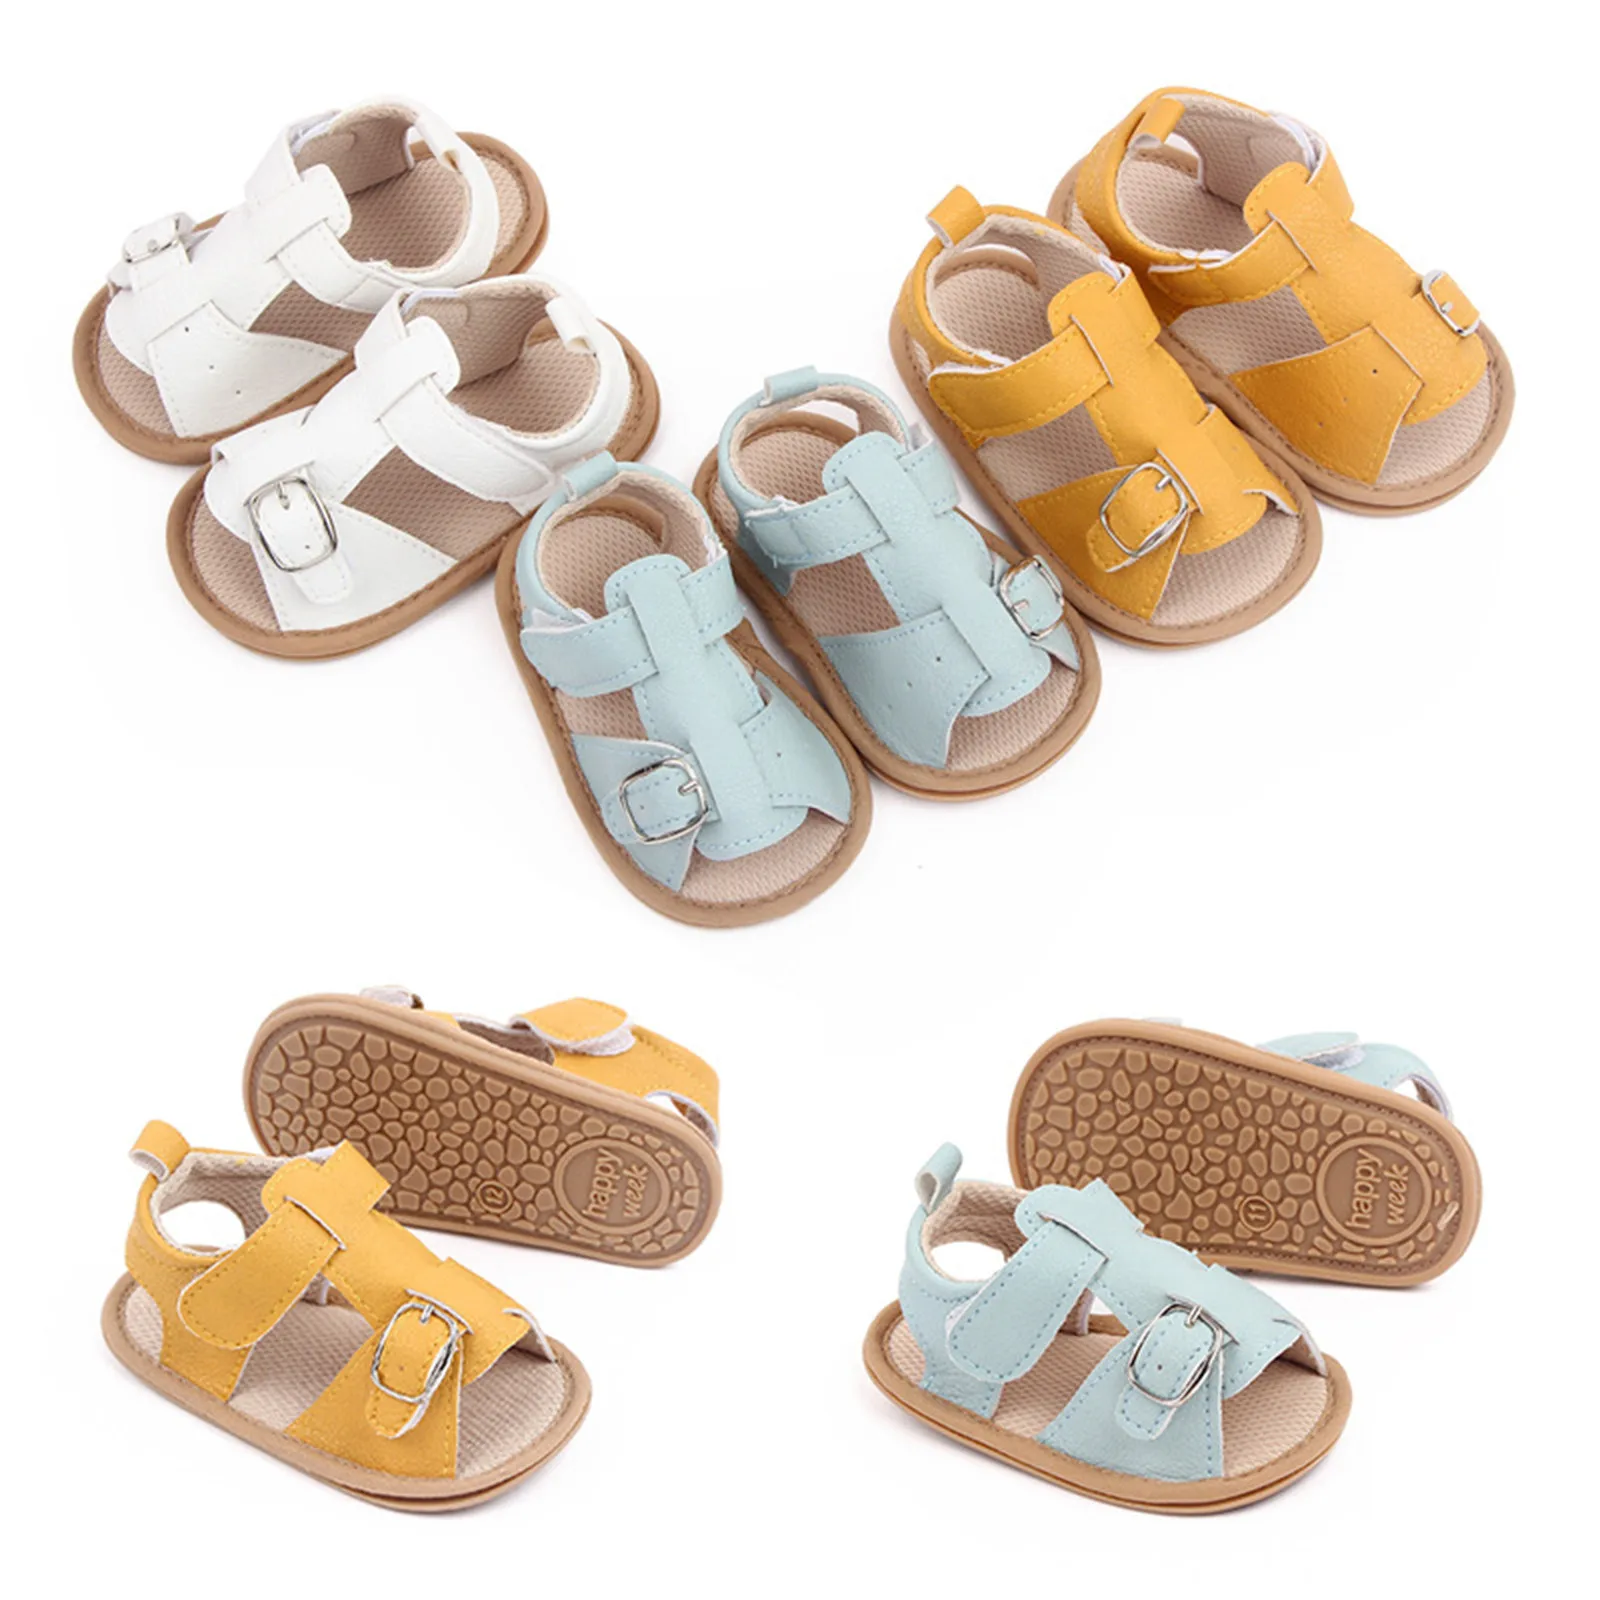 Sandalias de verano para bebés de 3 a 18 meses, zapatos suaves de Color sólido con hebilla para cuna, zapatos para primeros pasos